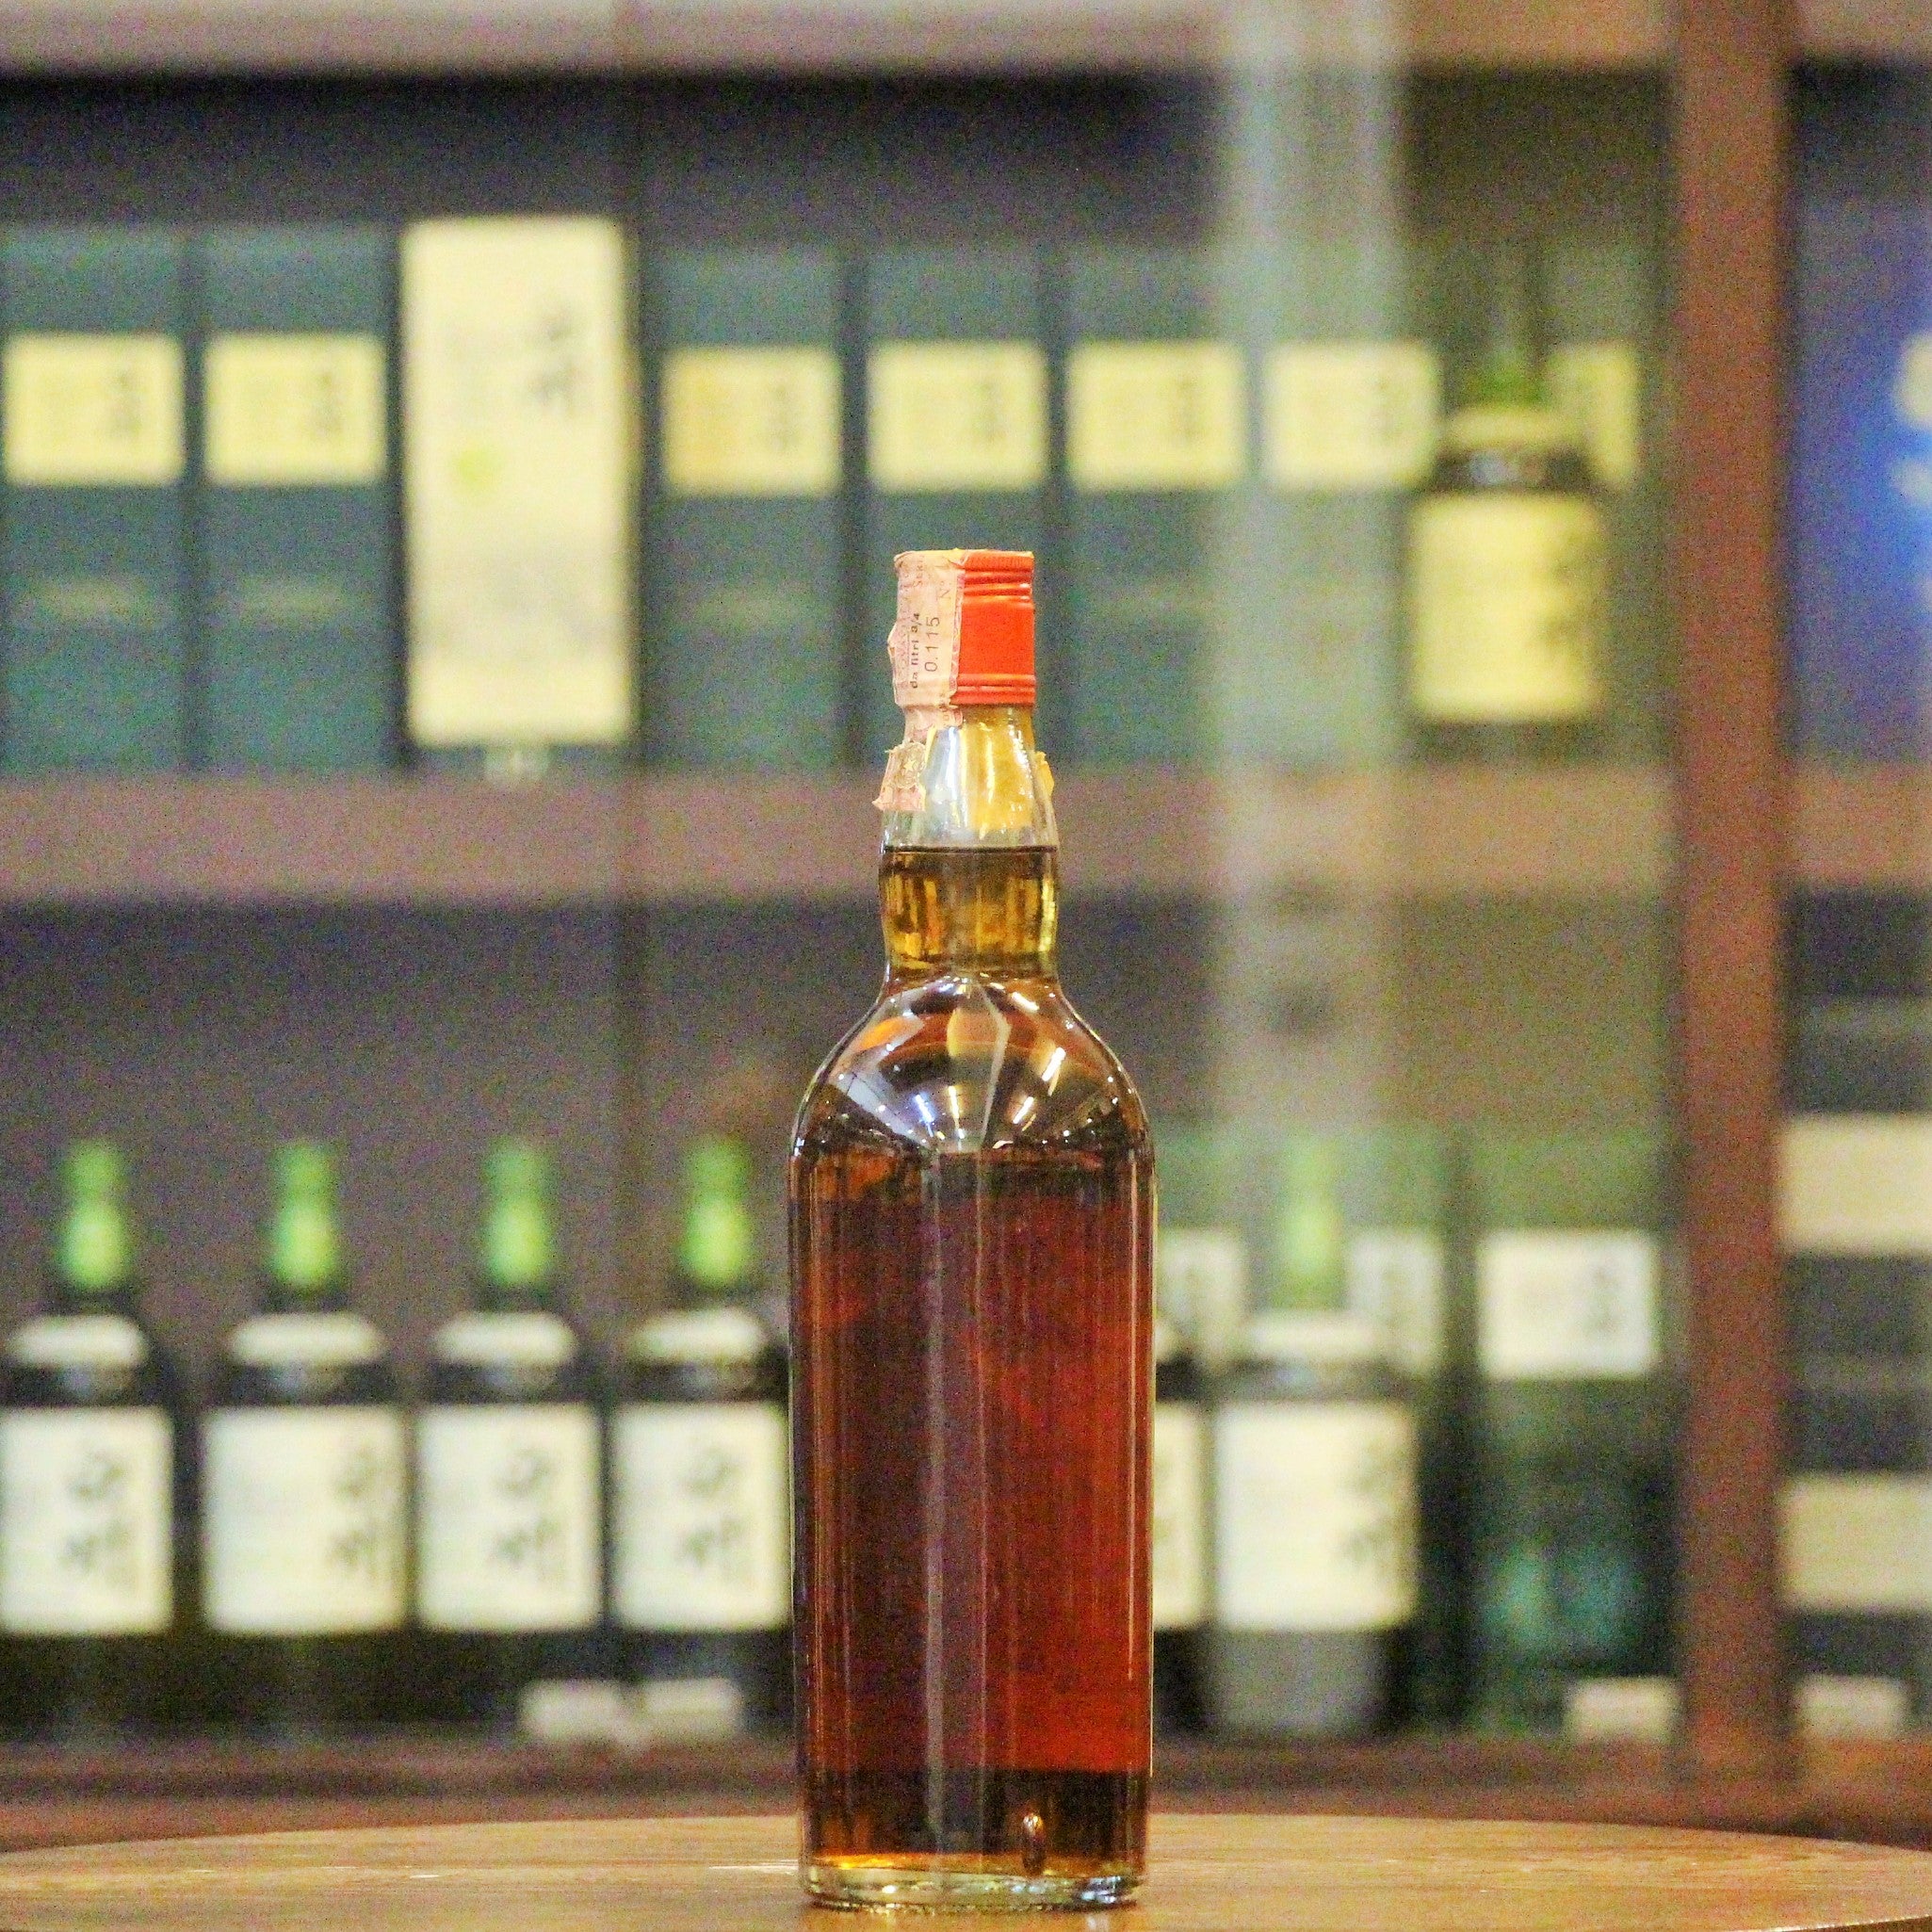 Macallan Glenlivet 1950 by Gordon & MacPhail 25 Years Old  A Pure Highland Malt Scotch Whisky